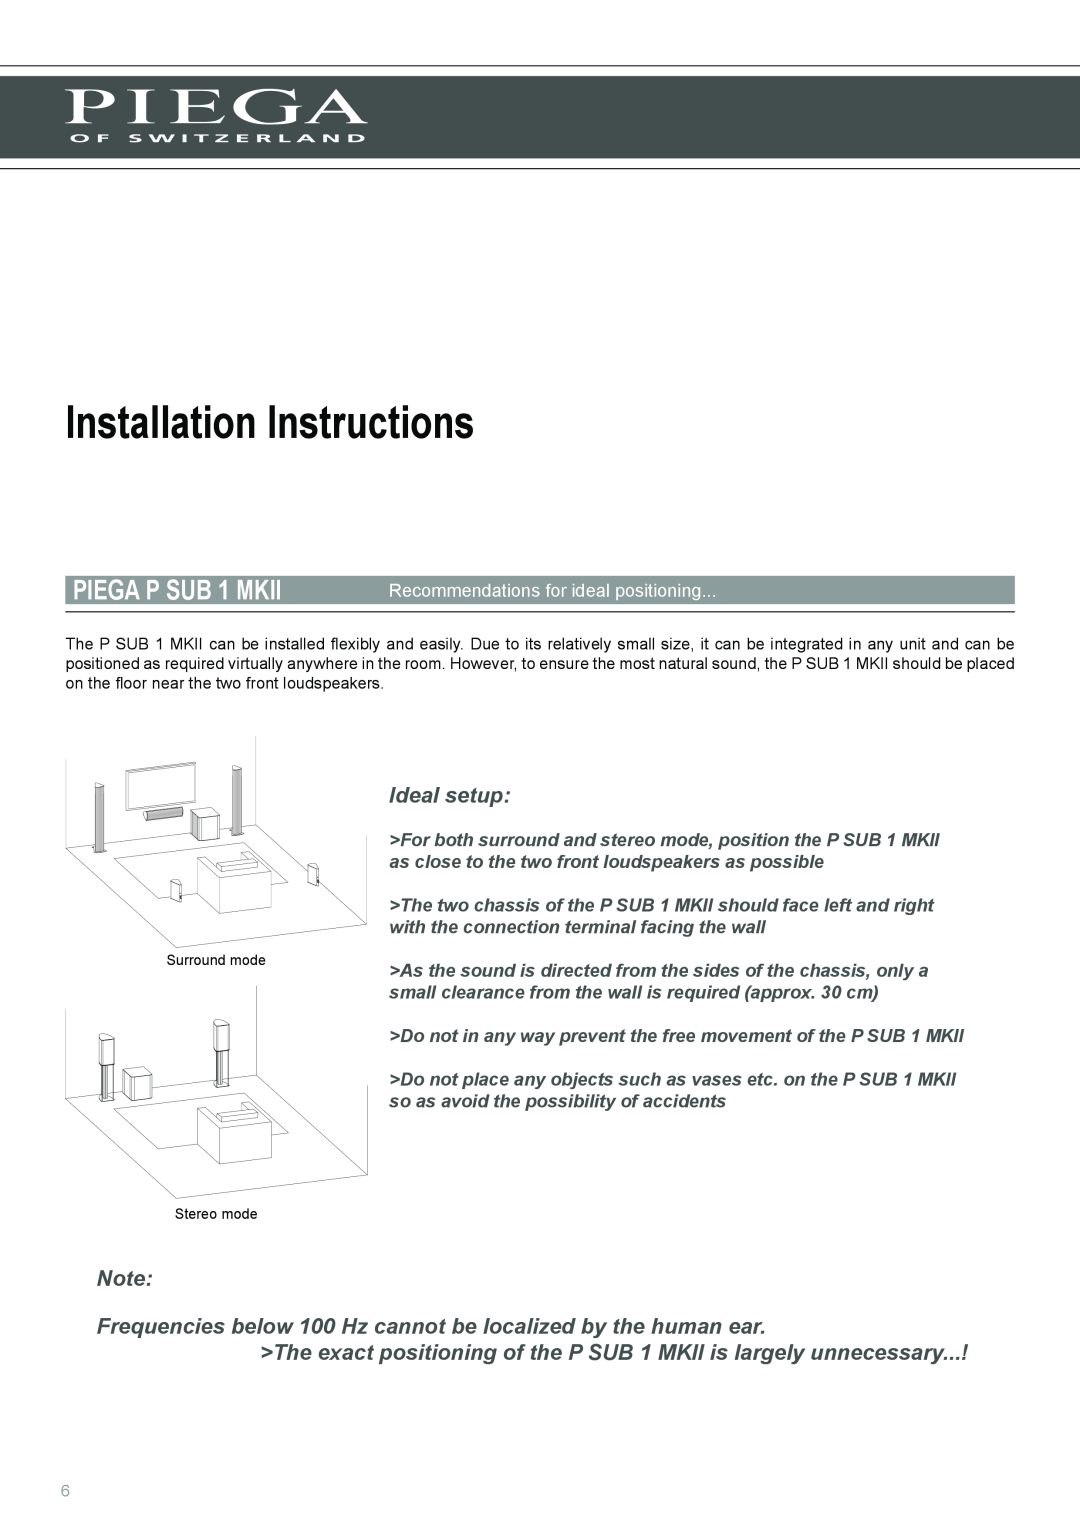 Piega user manual Installation Instructions, Ideal setup, PIEGA P SUB 1 MKII 